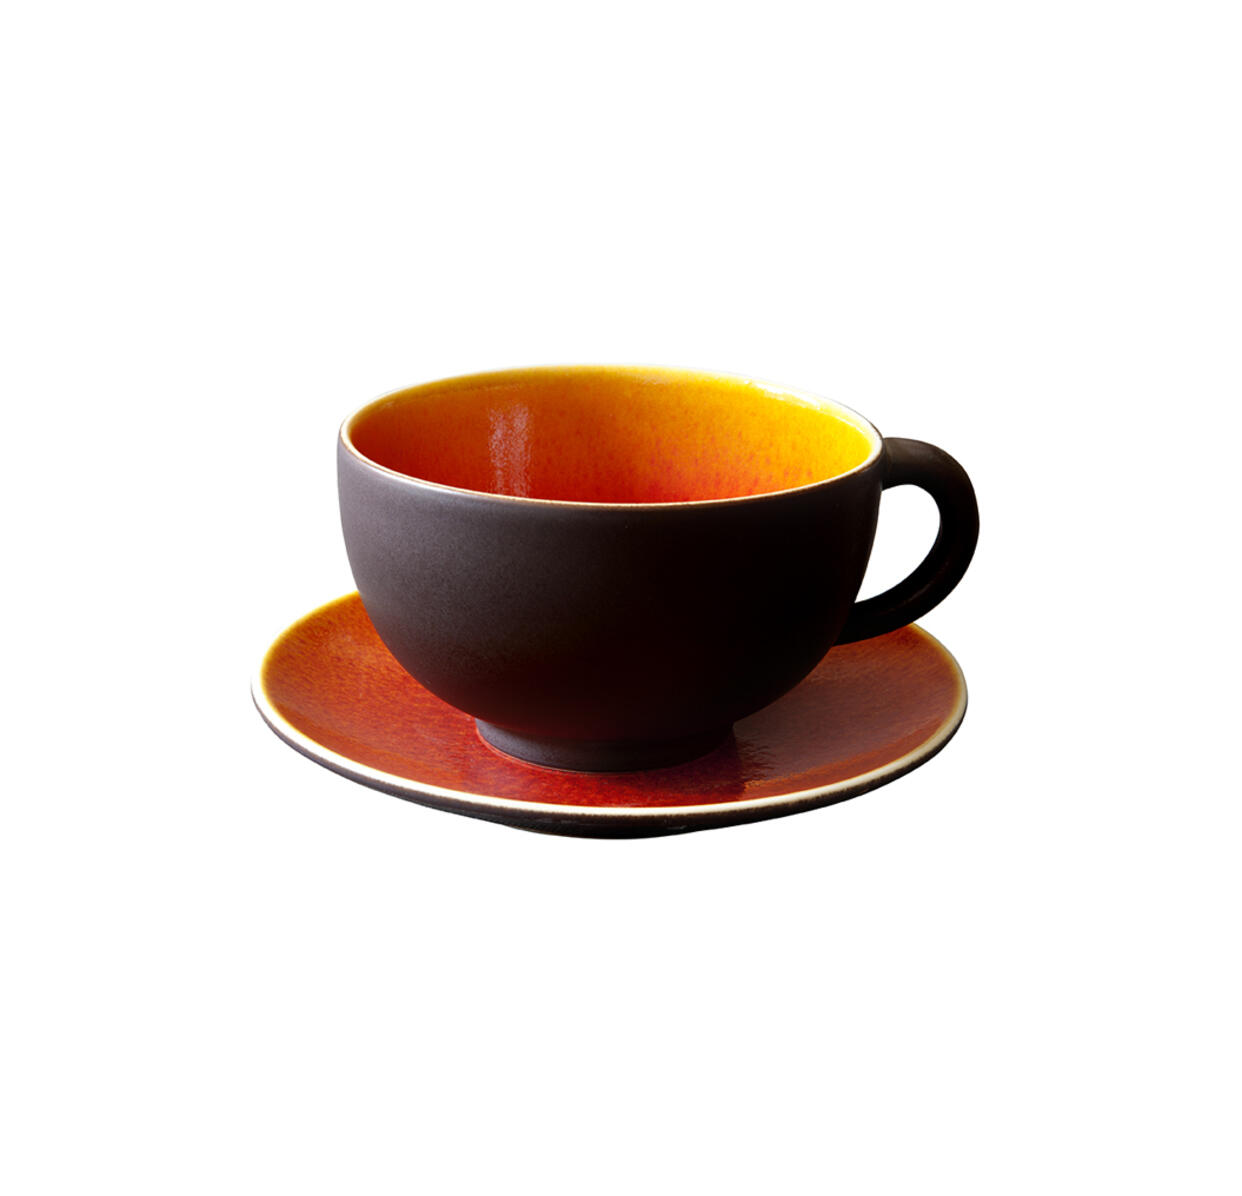 cup & saucer - l tourron orange ceramic manufacturer